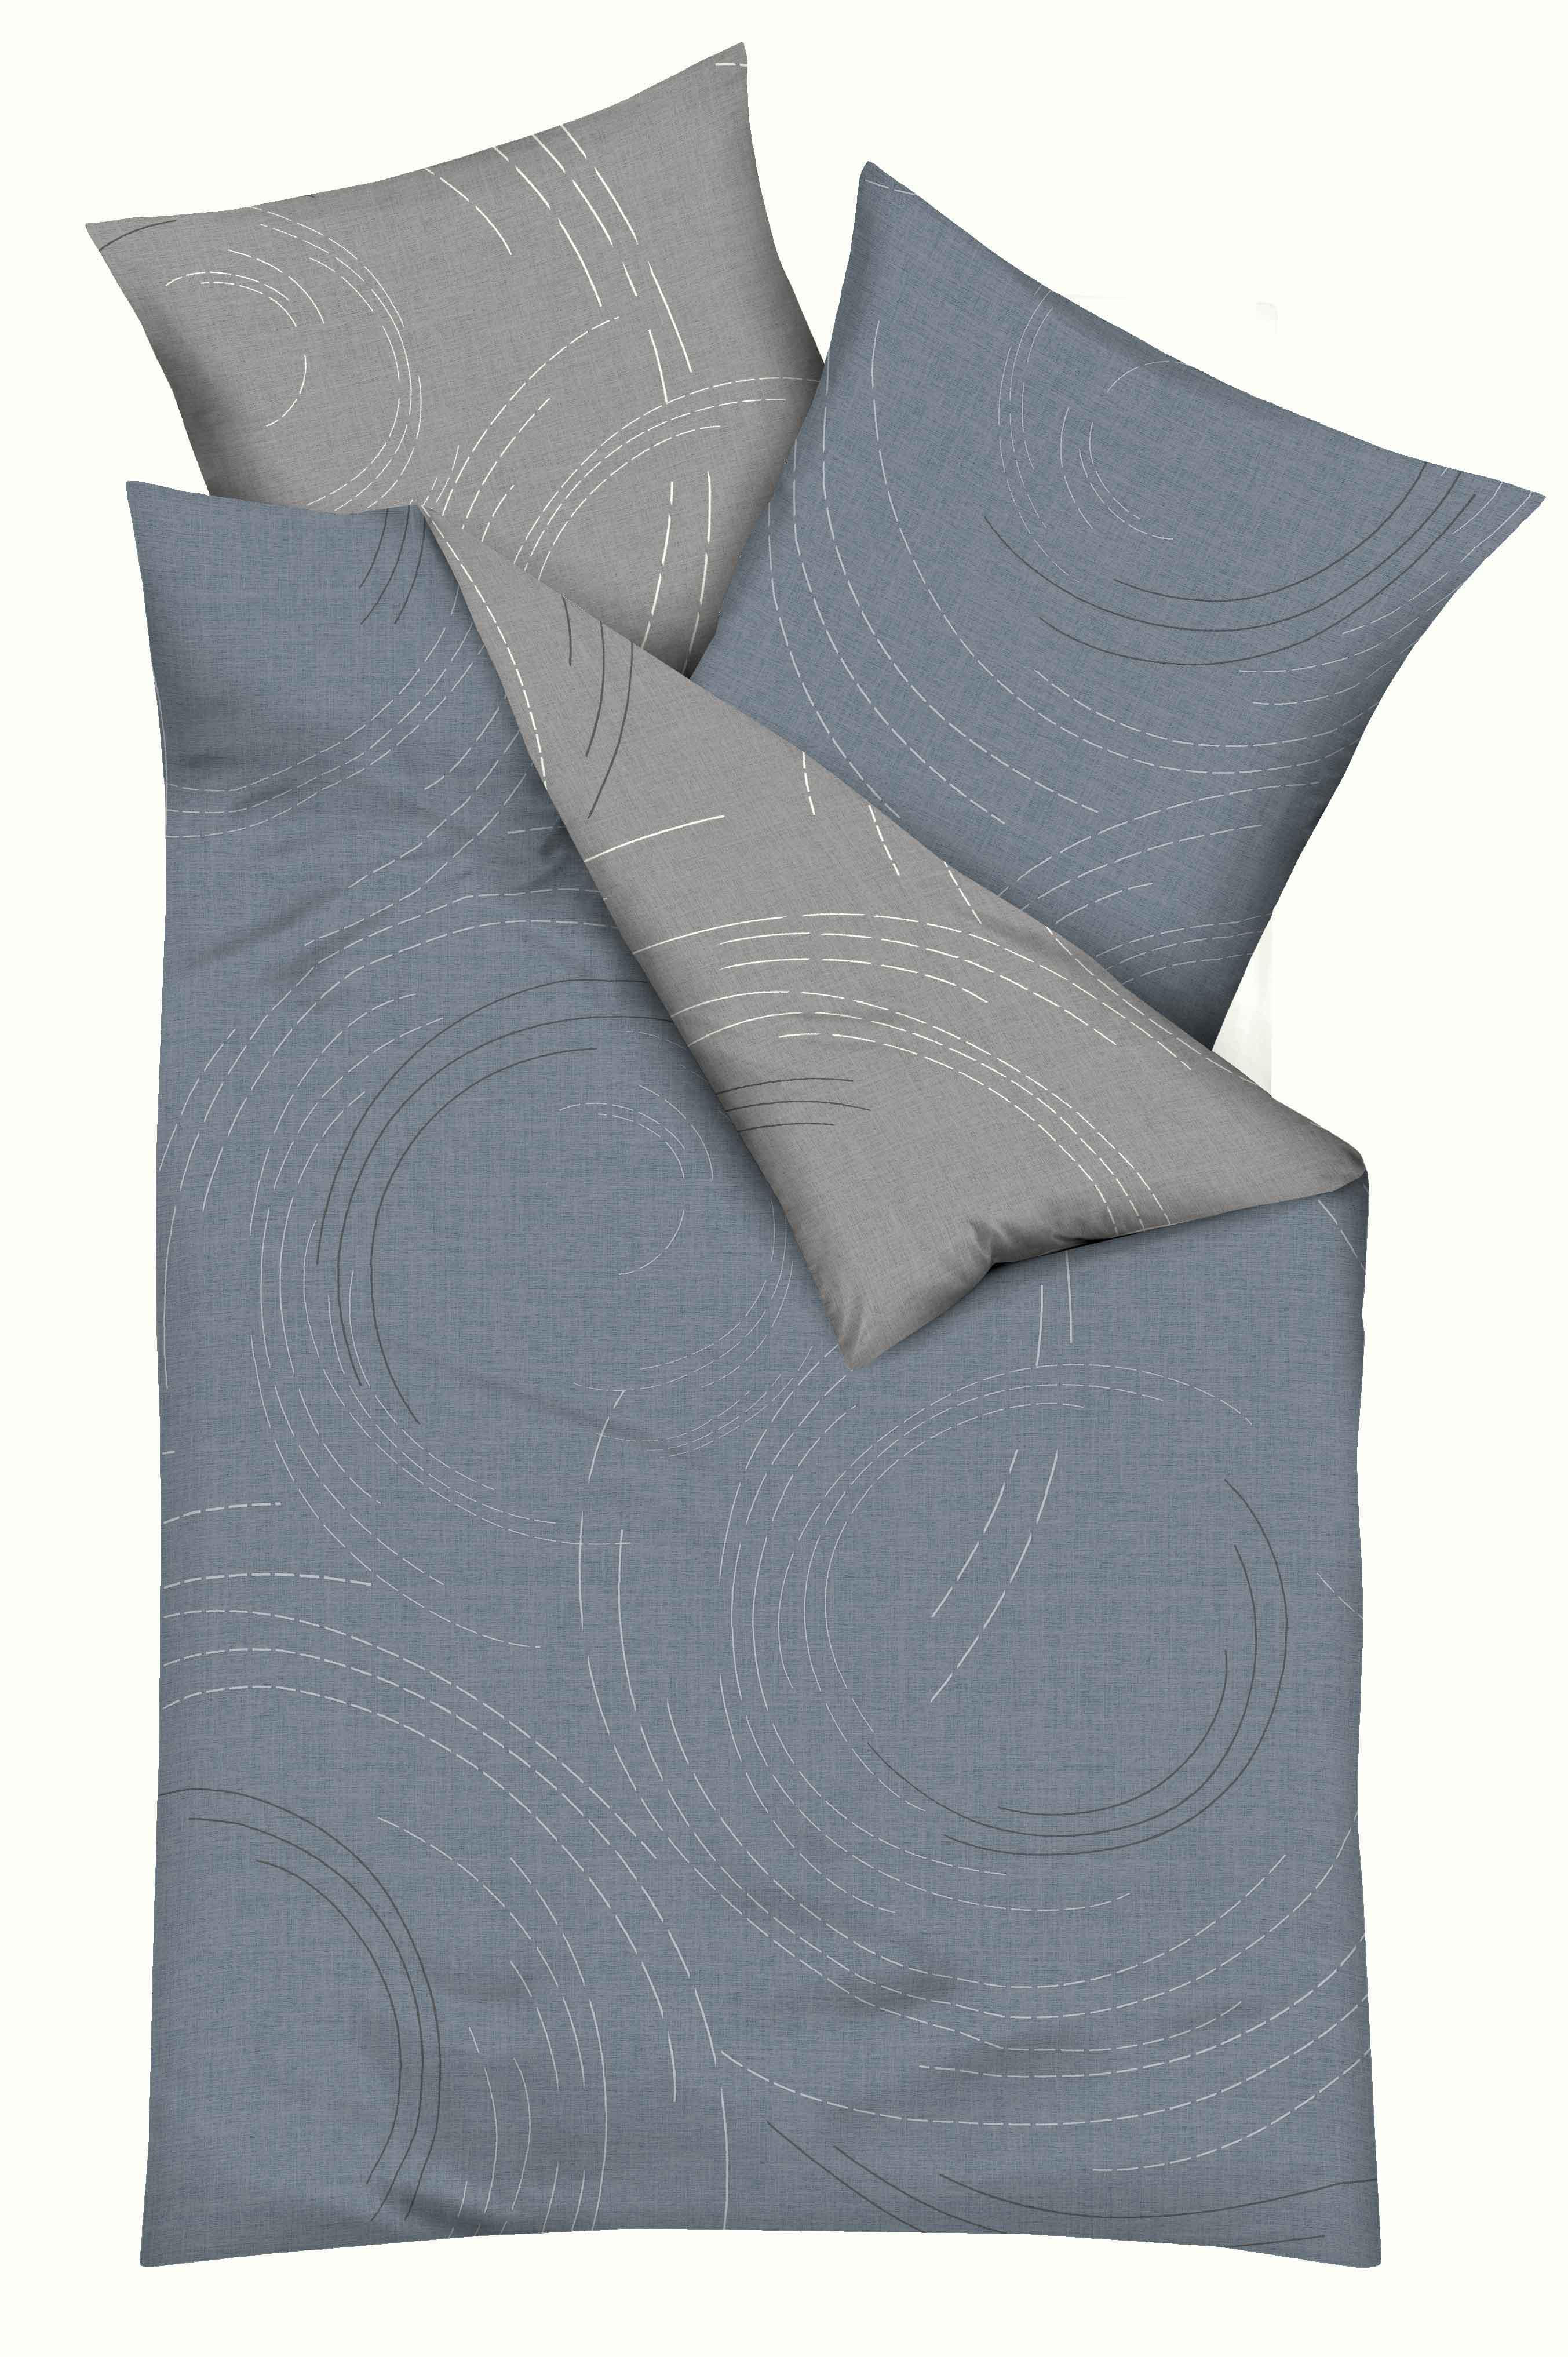 POSTELJNINA 140/200 cm saten siva, svetlo modra  - svetlo modra/siva, Moderno, tekstil (140/200cm) - Kaeppel